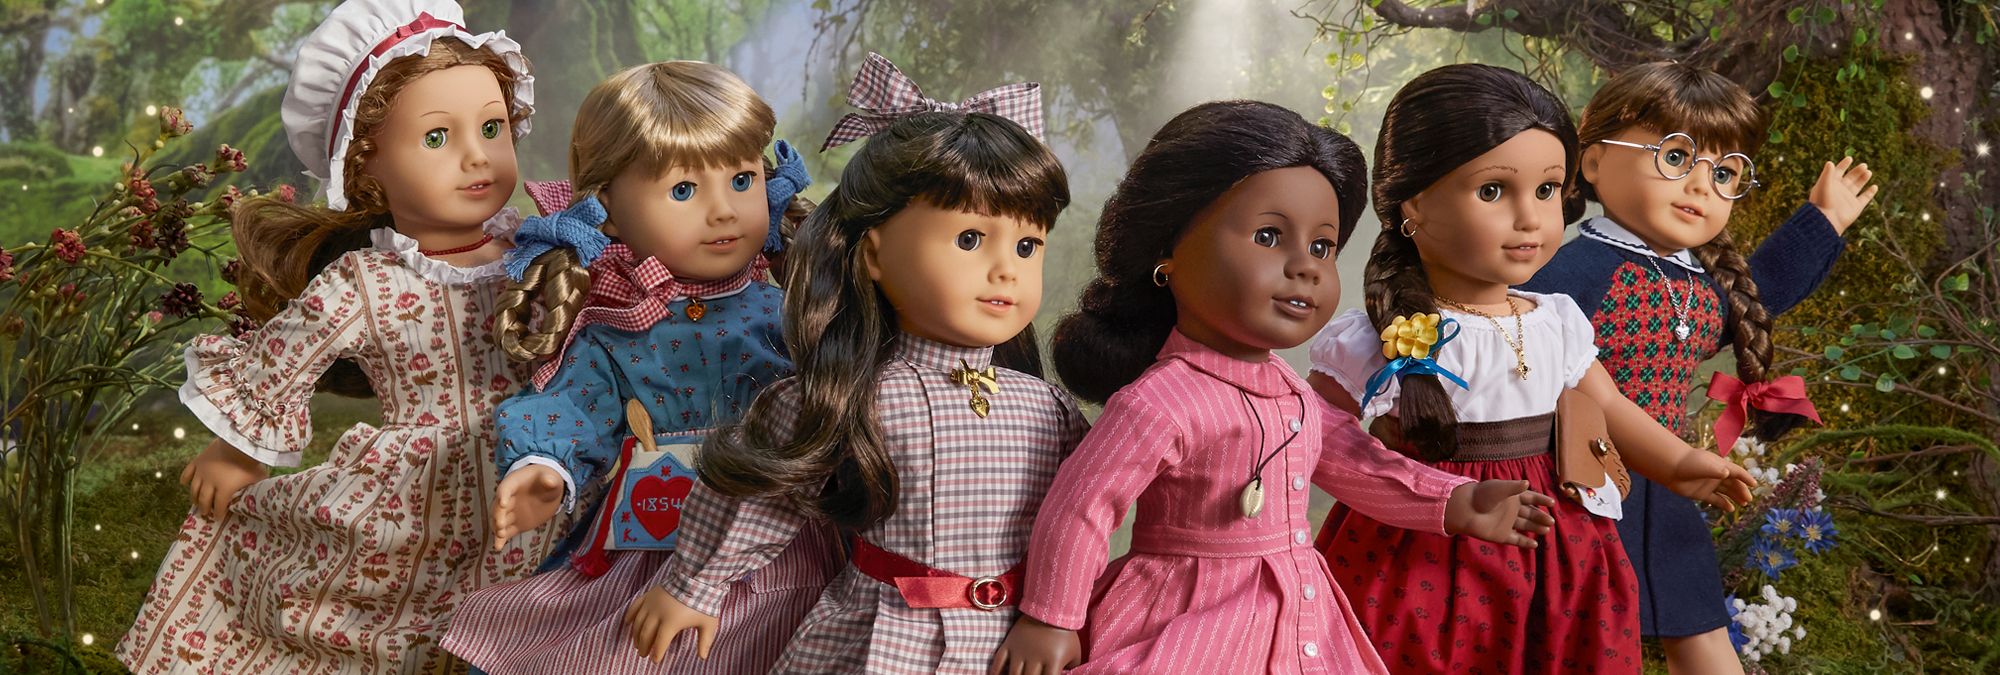 Historical American Girl Doll Trivia Quiz